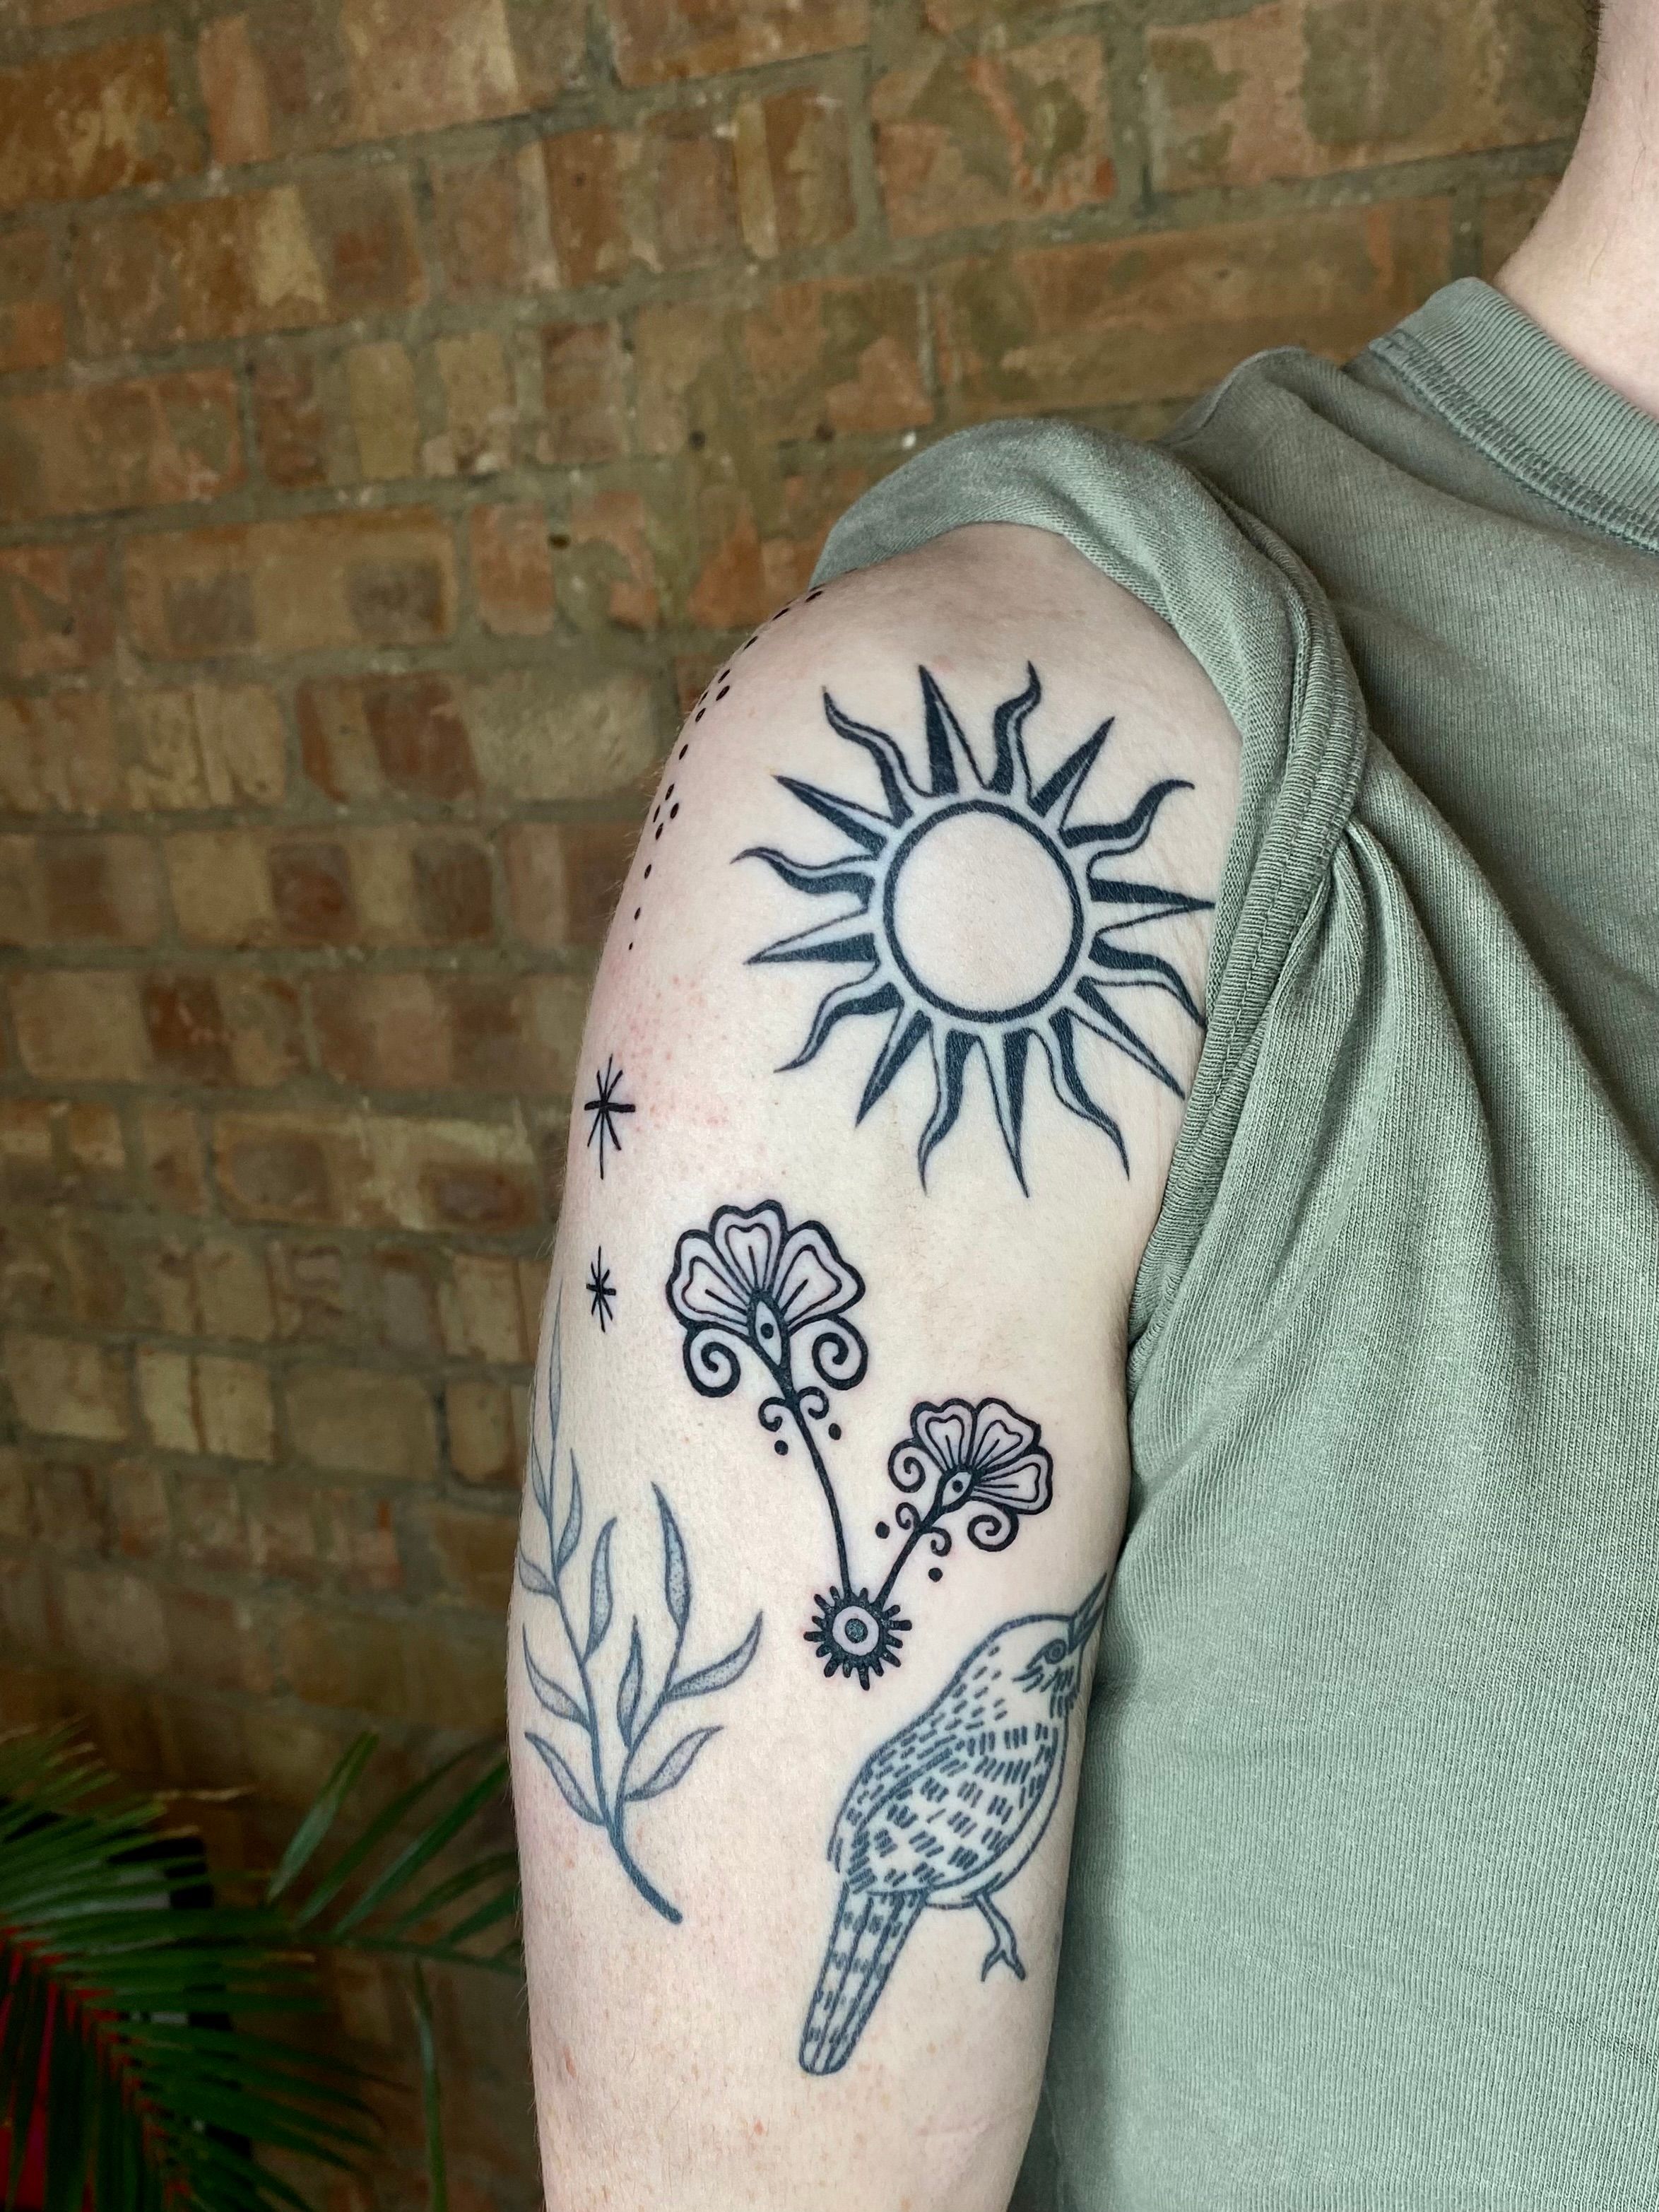 Sun Flower Tattoo on Shoulder Blade - Best Tattoo Ideas Gallery